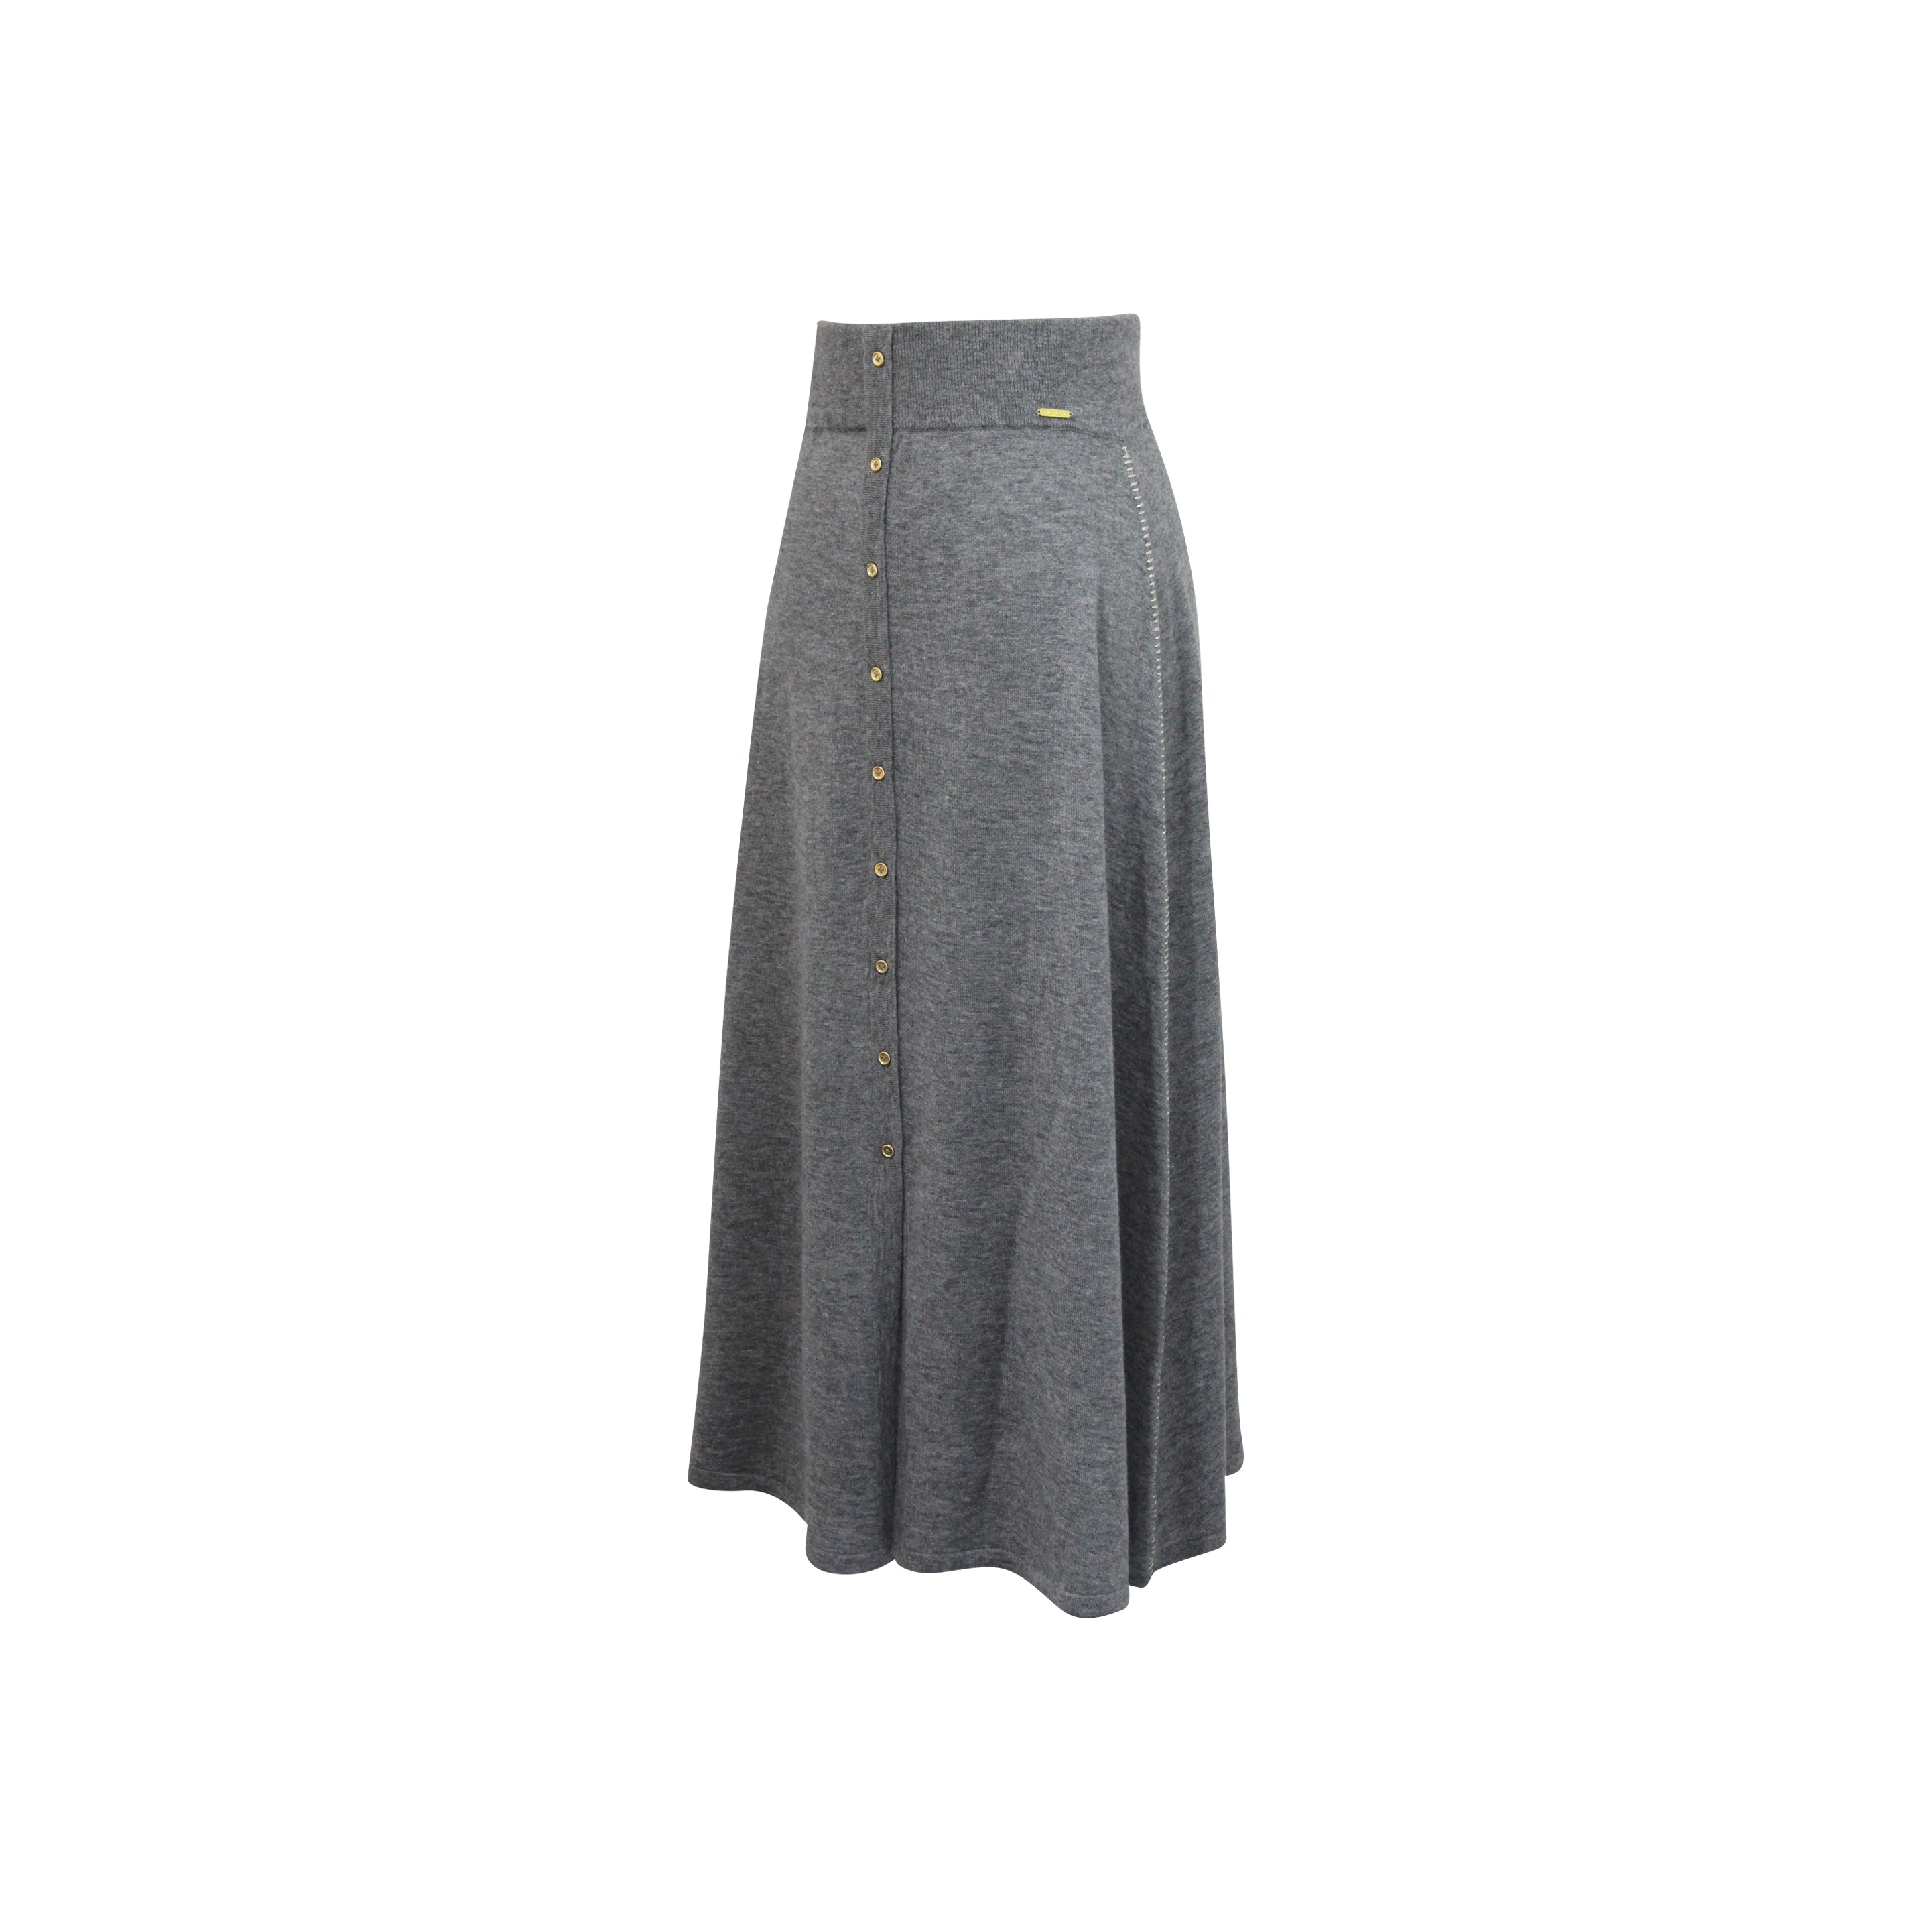 Shop Woven & Knit Skirts - Gosia Orlowska